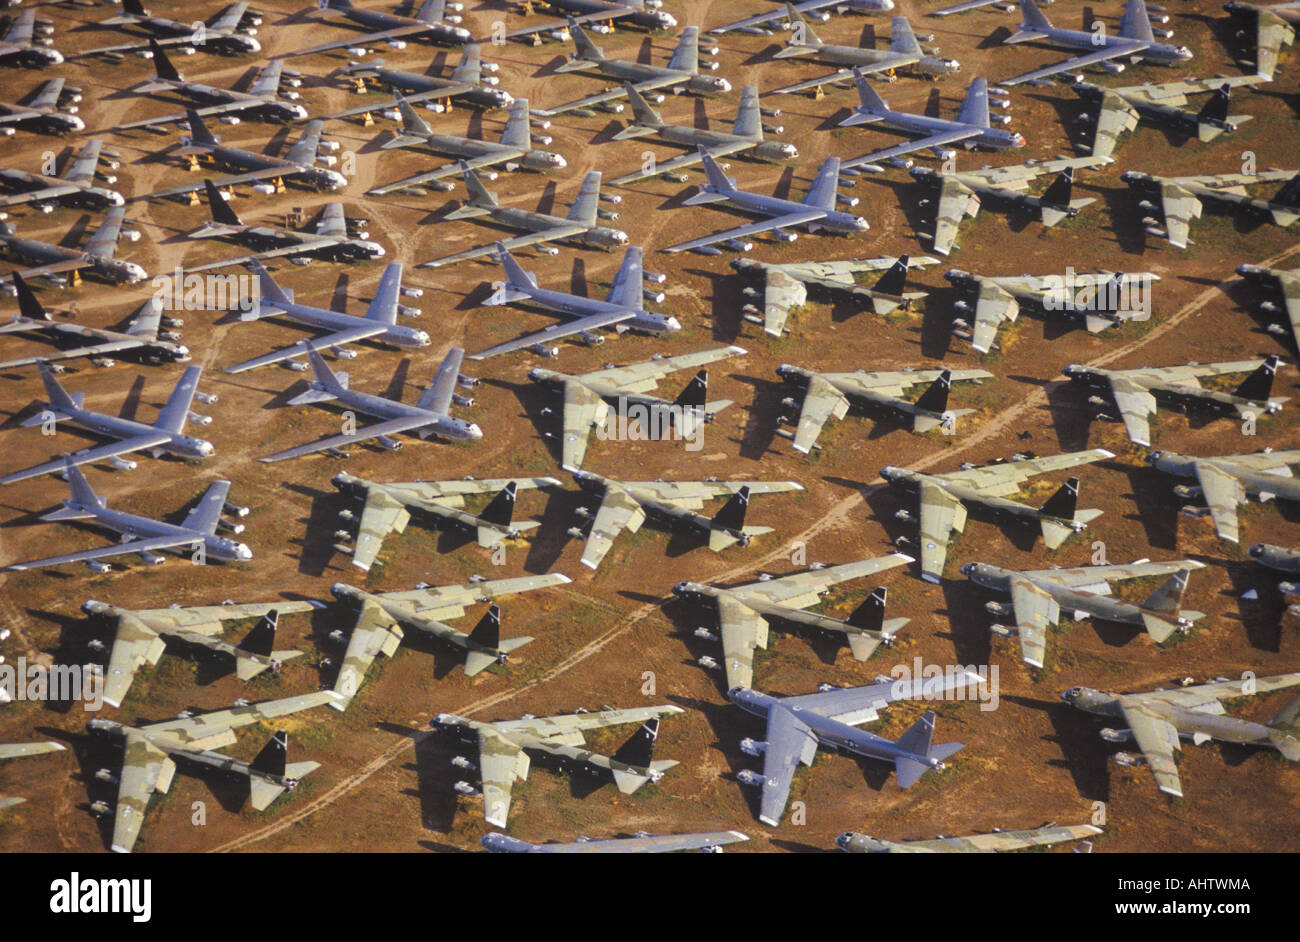 A Field of B 52 Aircraft Davis Montham Air Force Base Tucson Arizona Stock Photo